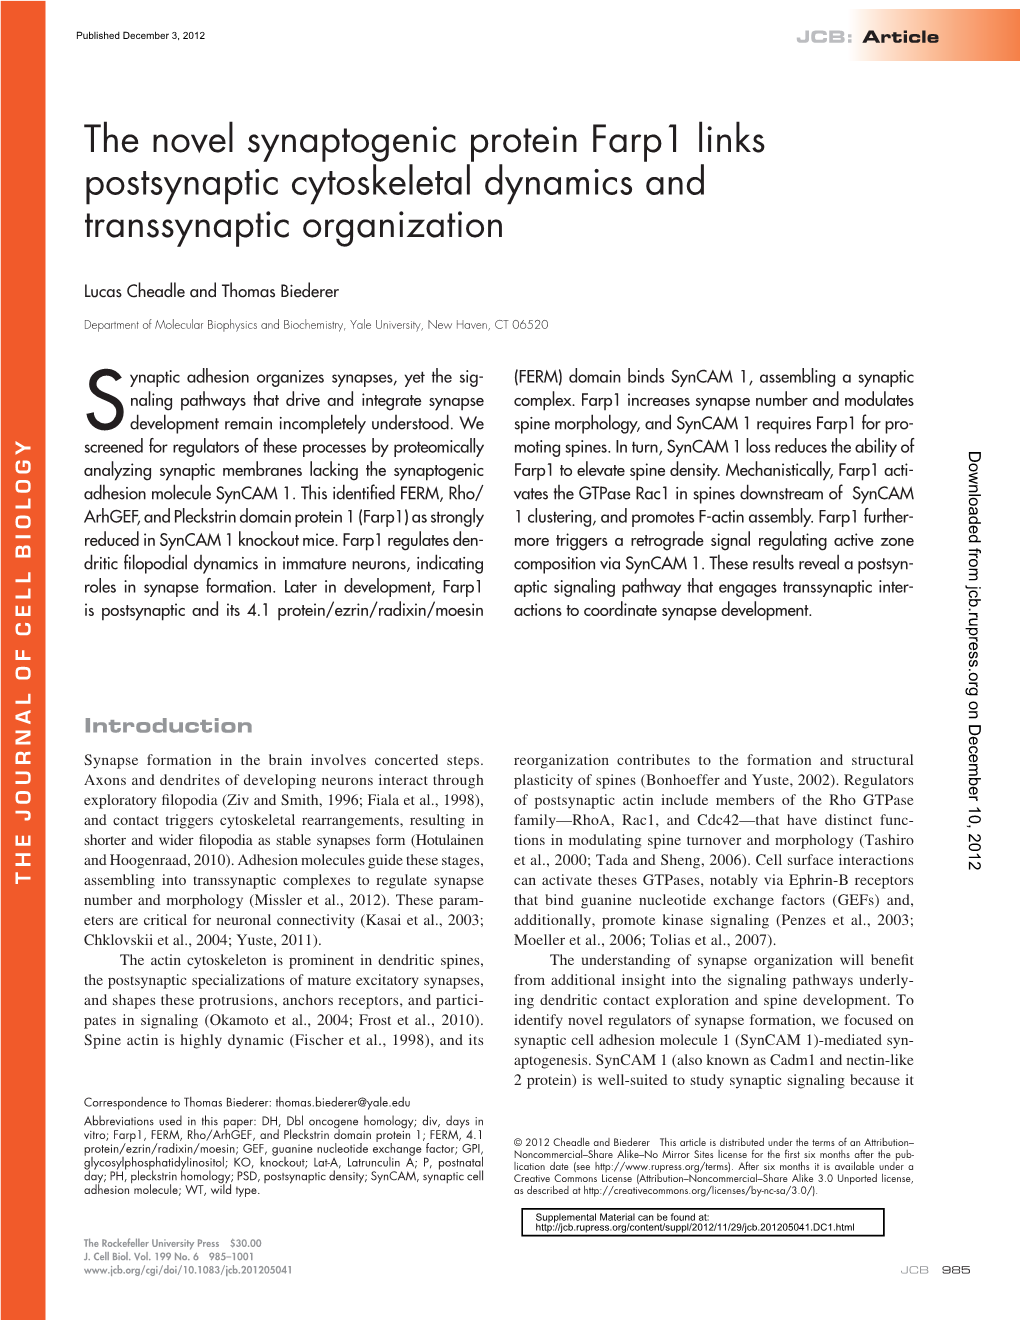 The Novel Synaptogenic Protein Farp1 Links Postsynaptic Cytoskeletal Dynamics and Transsynaptic Organization